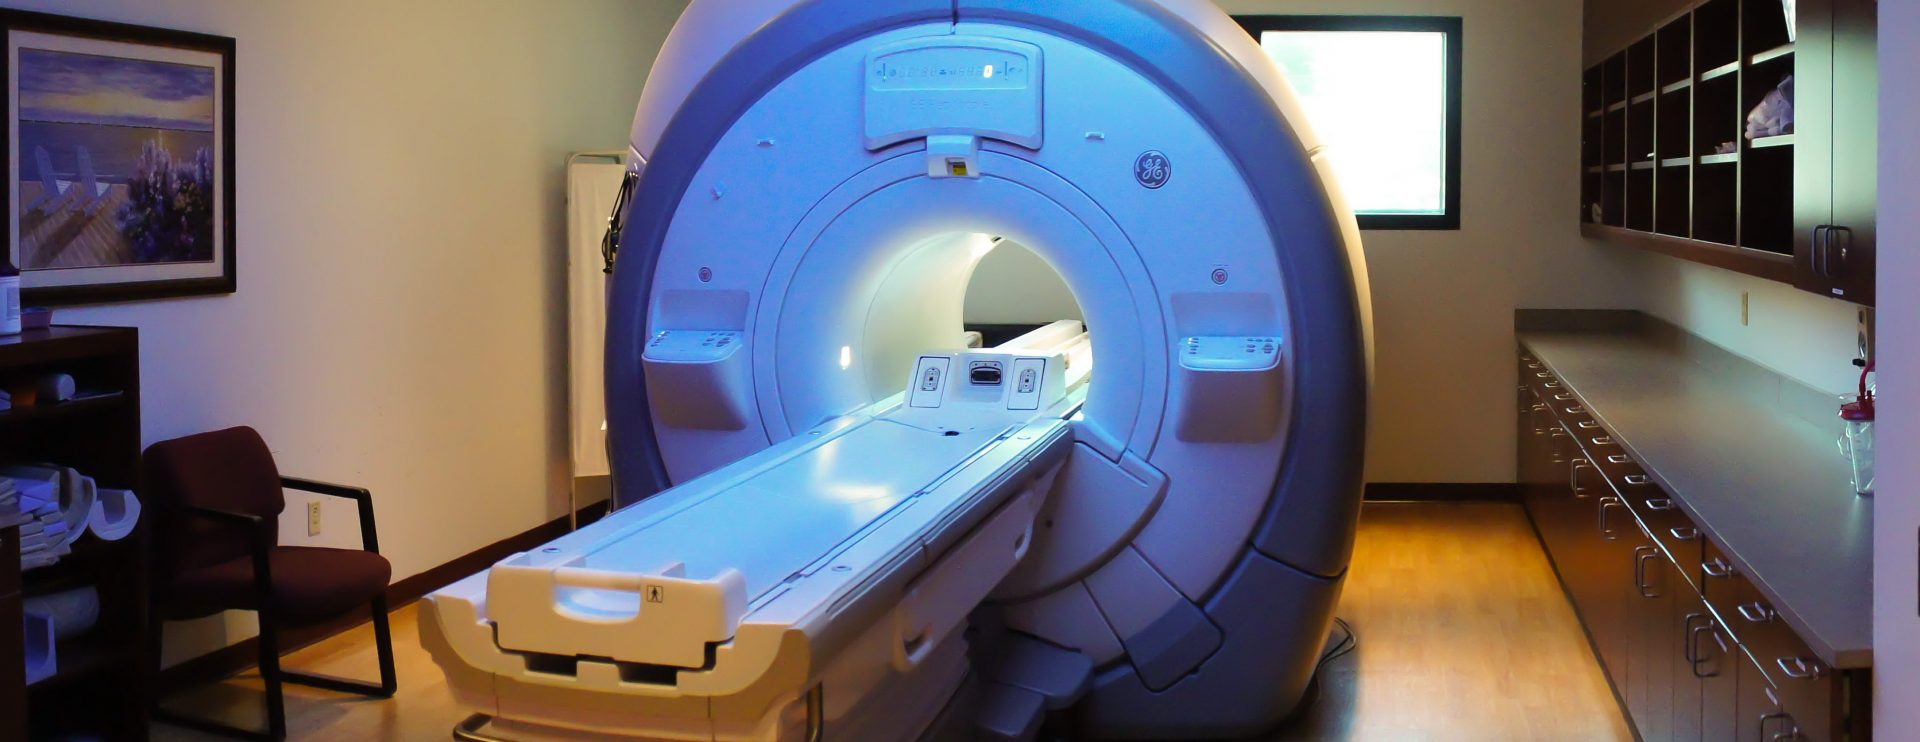 MRI Memory Loss Case Study